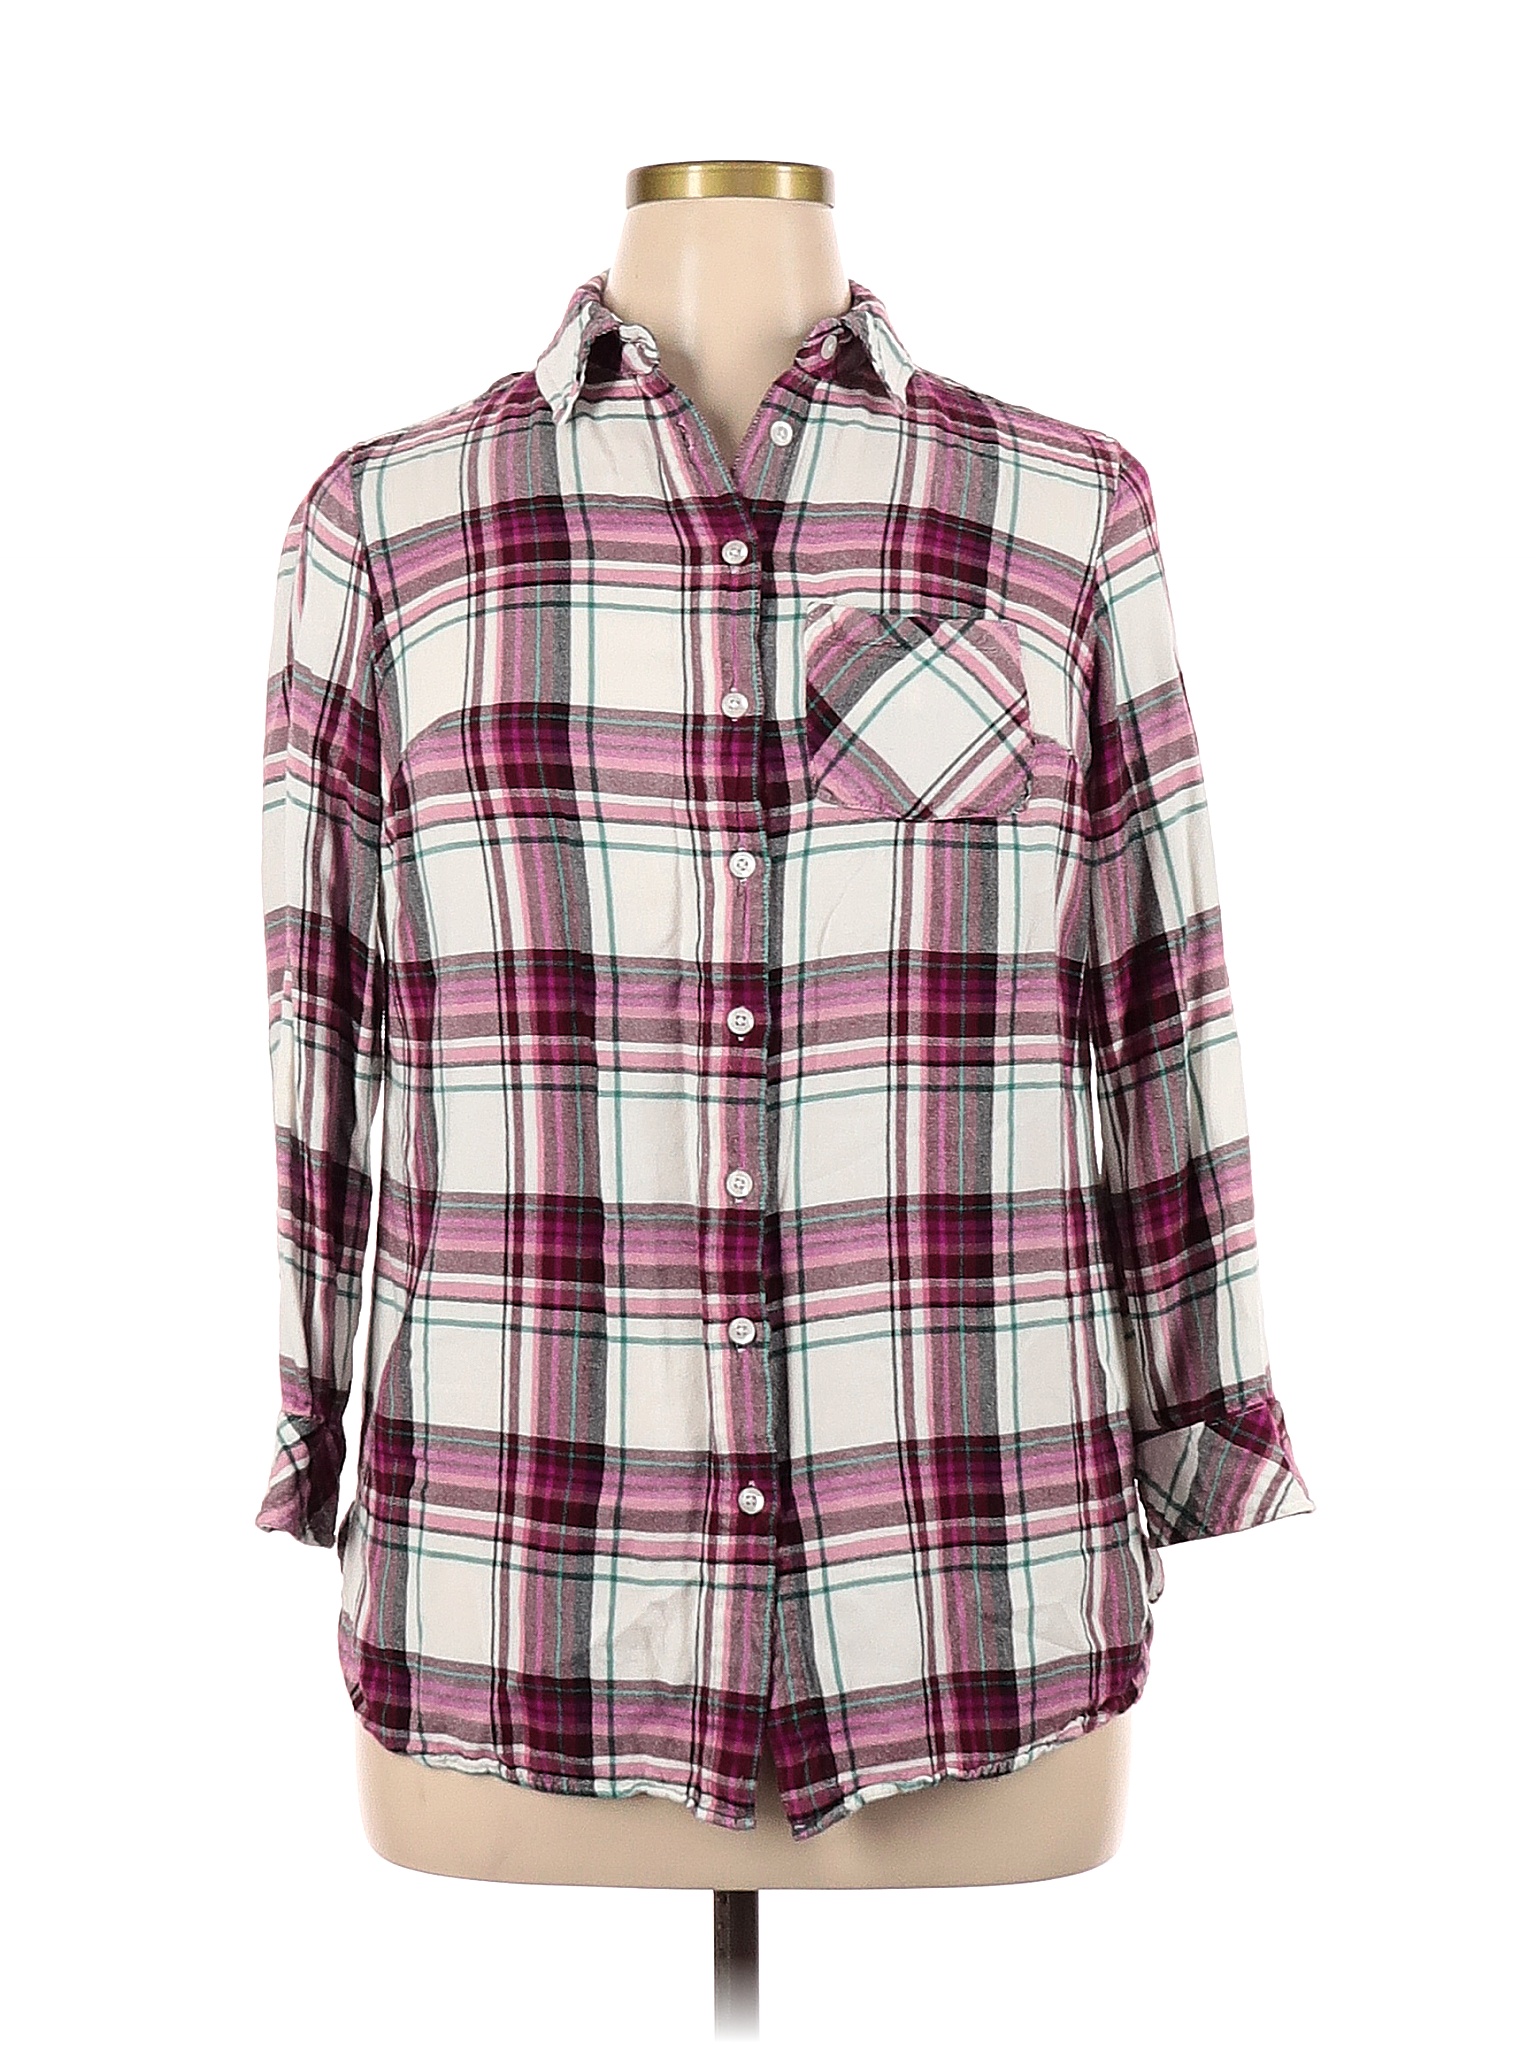 Ava & Viv 100% Rayon Plaid Pink Long Sleeve Button-Down Shirt Size 14 ...